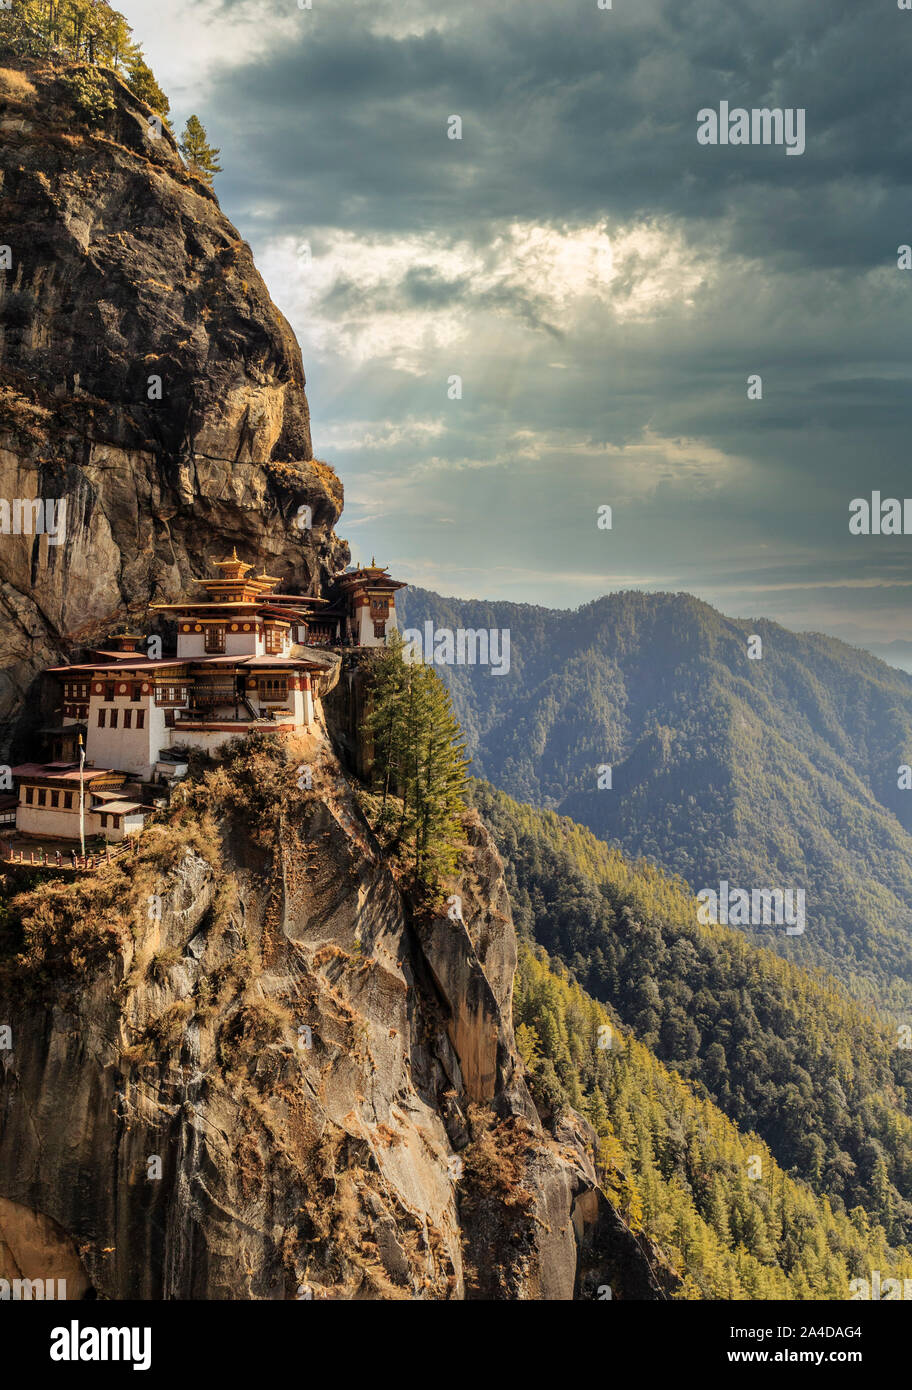 Tiger's nest Temple or Taktsang Palphug Monastery (Bhutan) Stock Photo